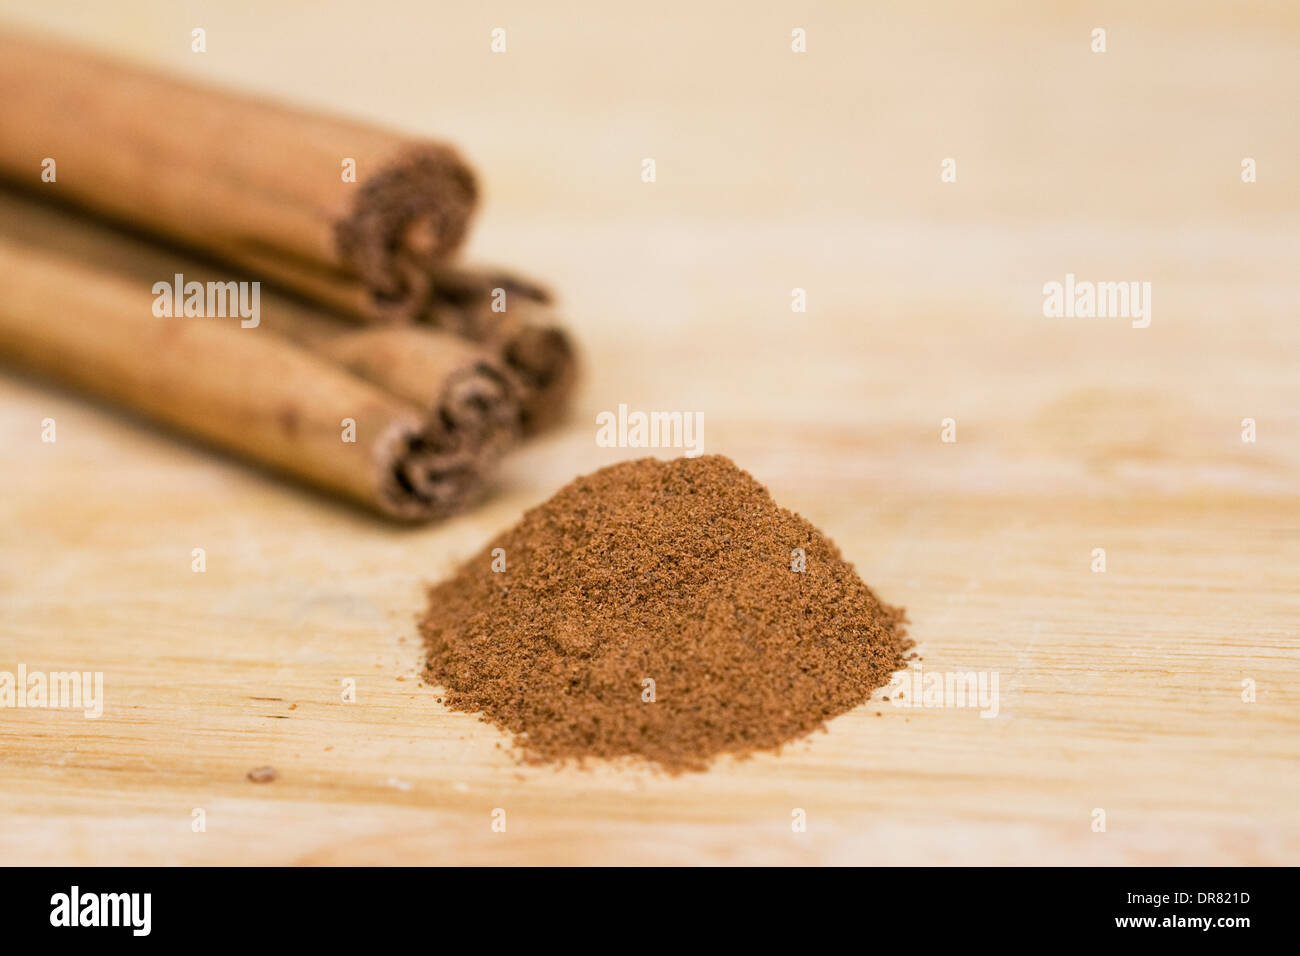 Cinnamon sticks and ground cinnamon on a wooden board. Stock Photo